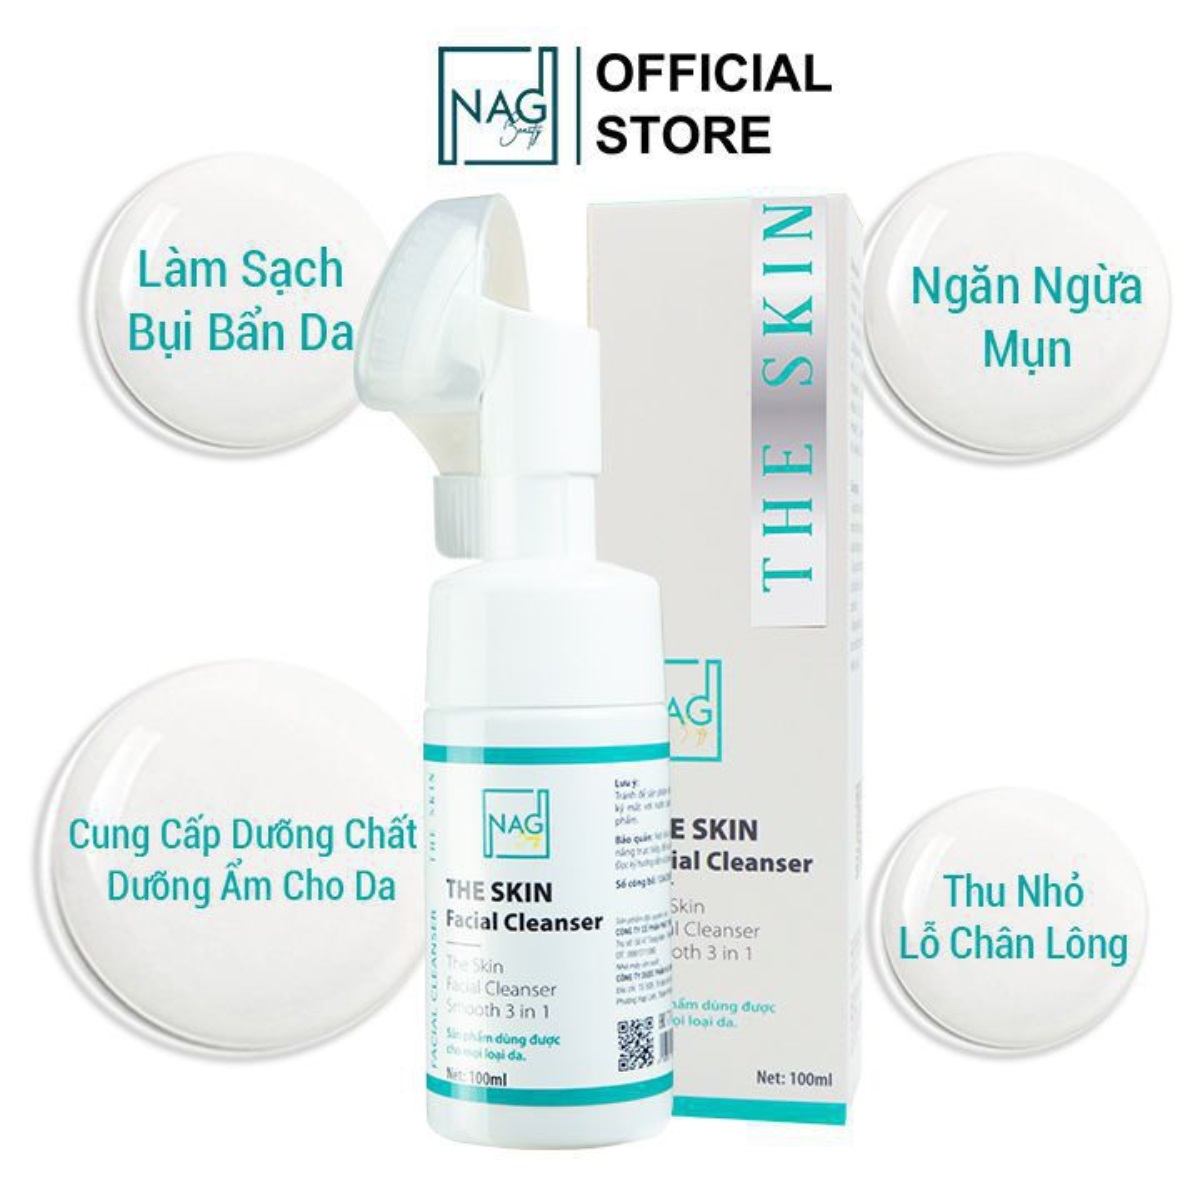 NAG The Skin Facial Cleanser